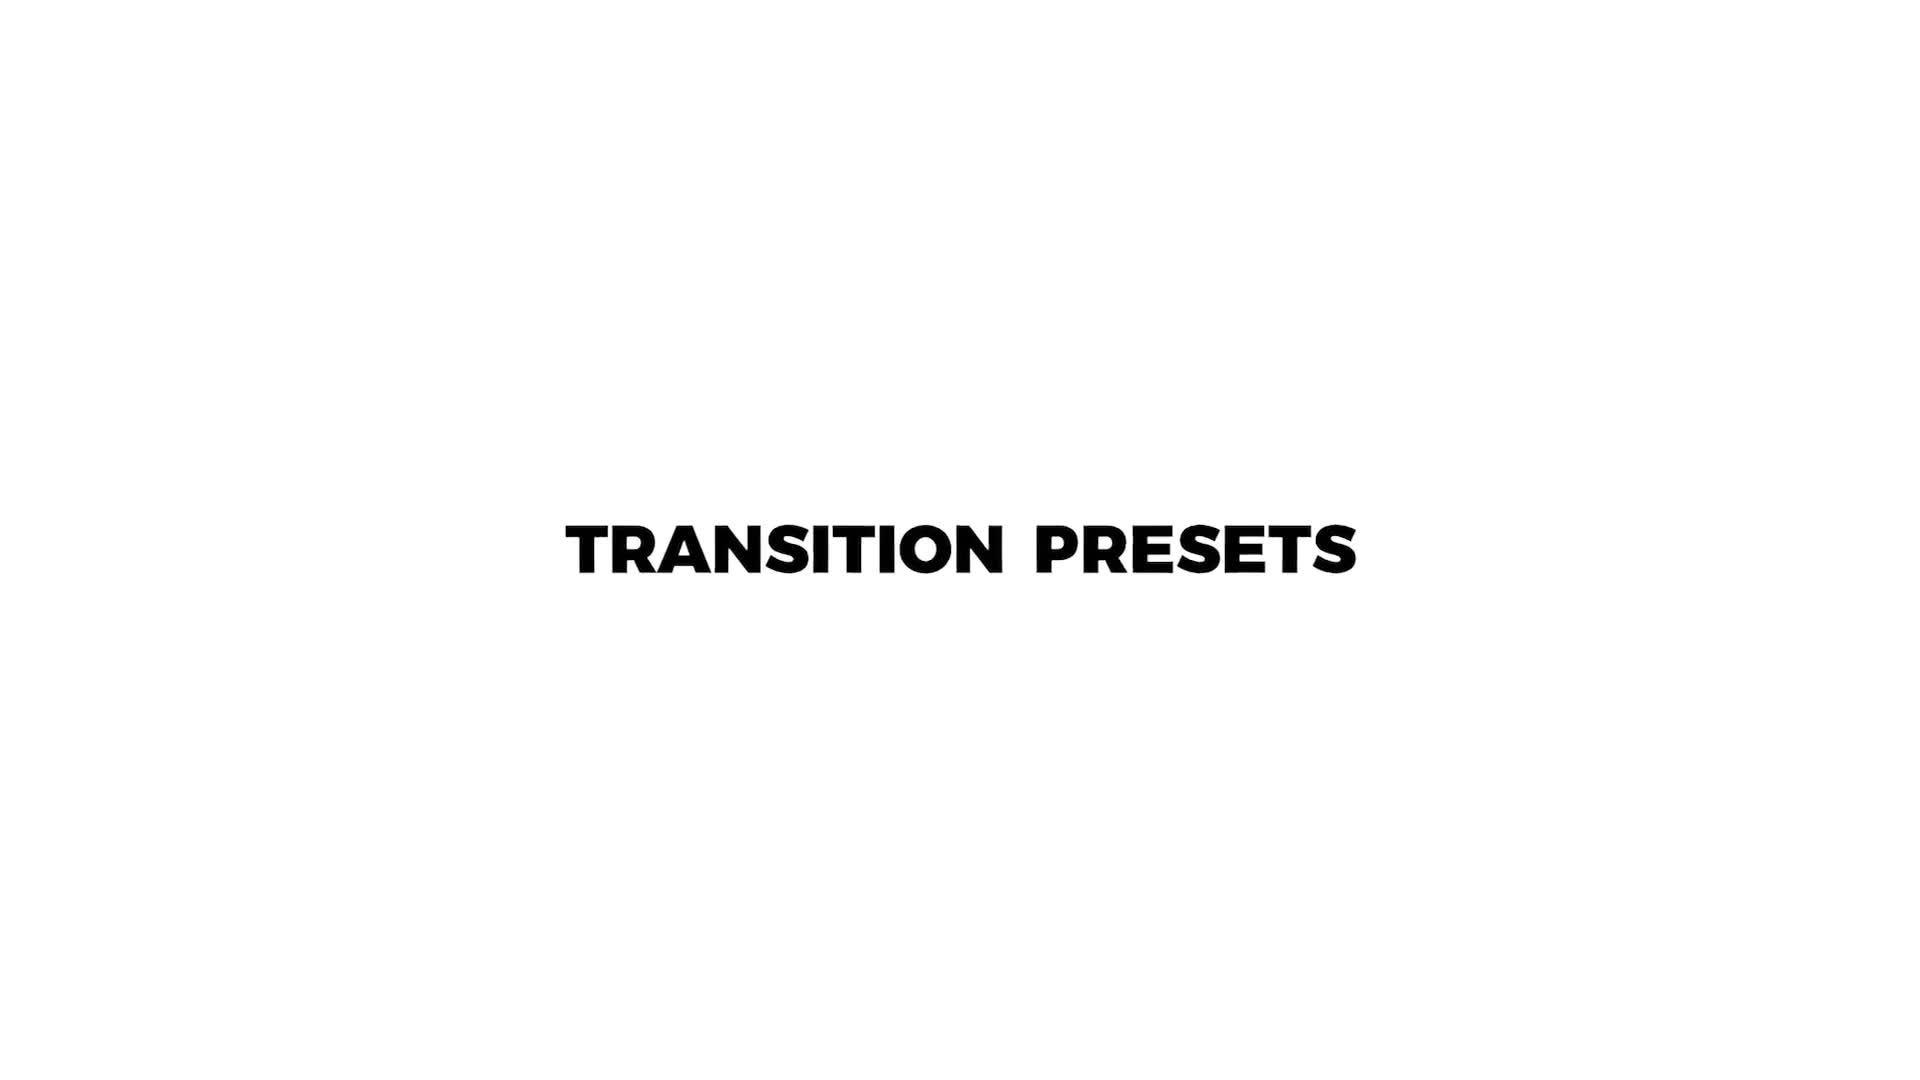 Transition Presets, Sound FX - Download Videohive 21797912